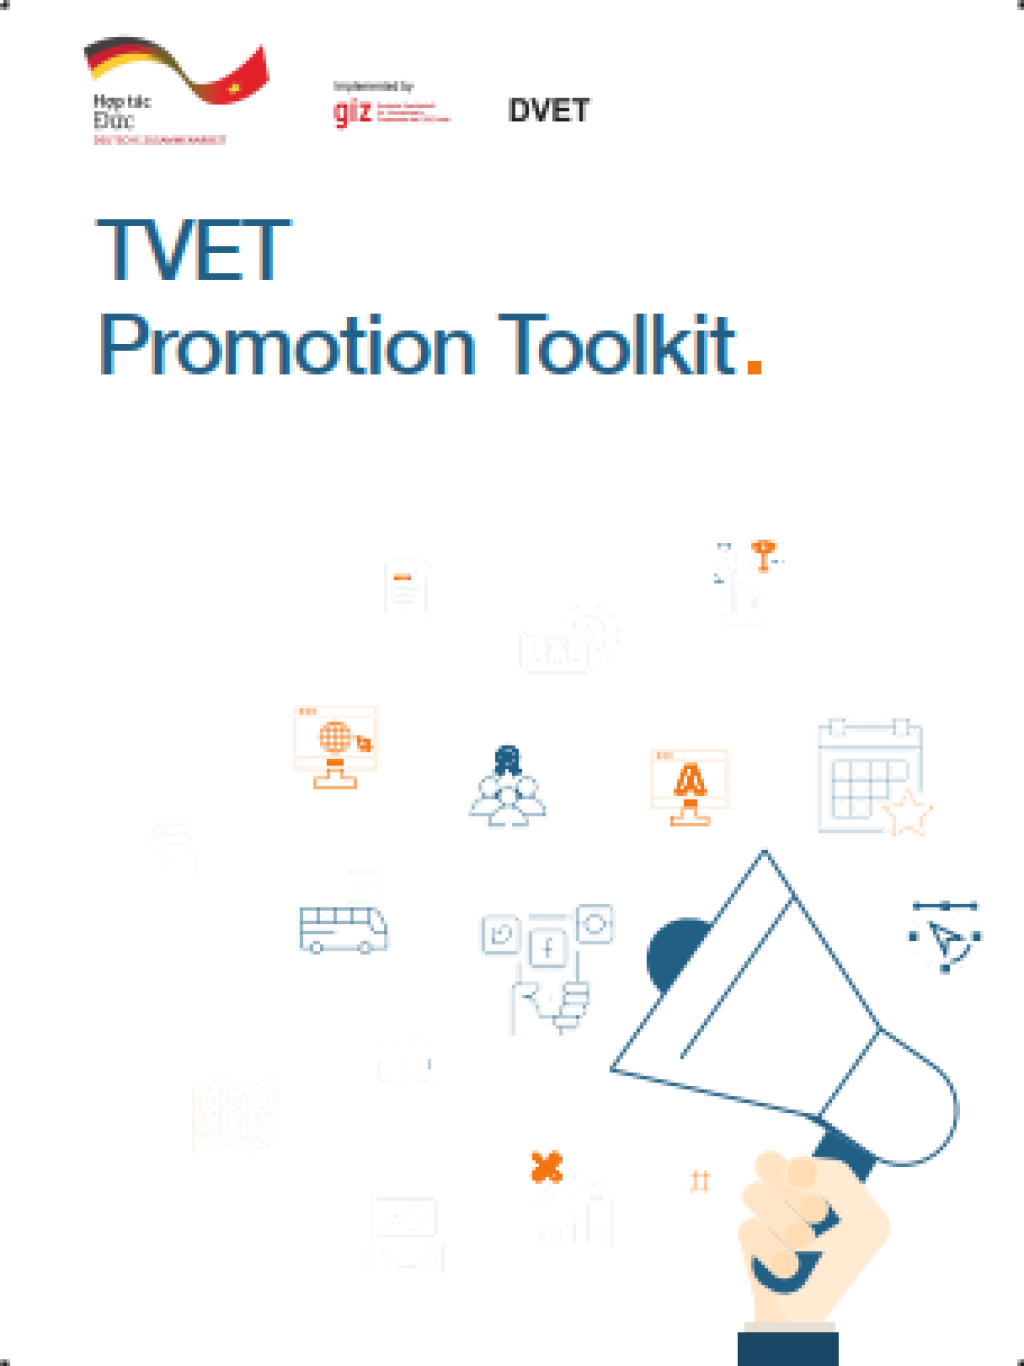 TVET image promotion toolkit